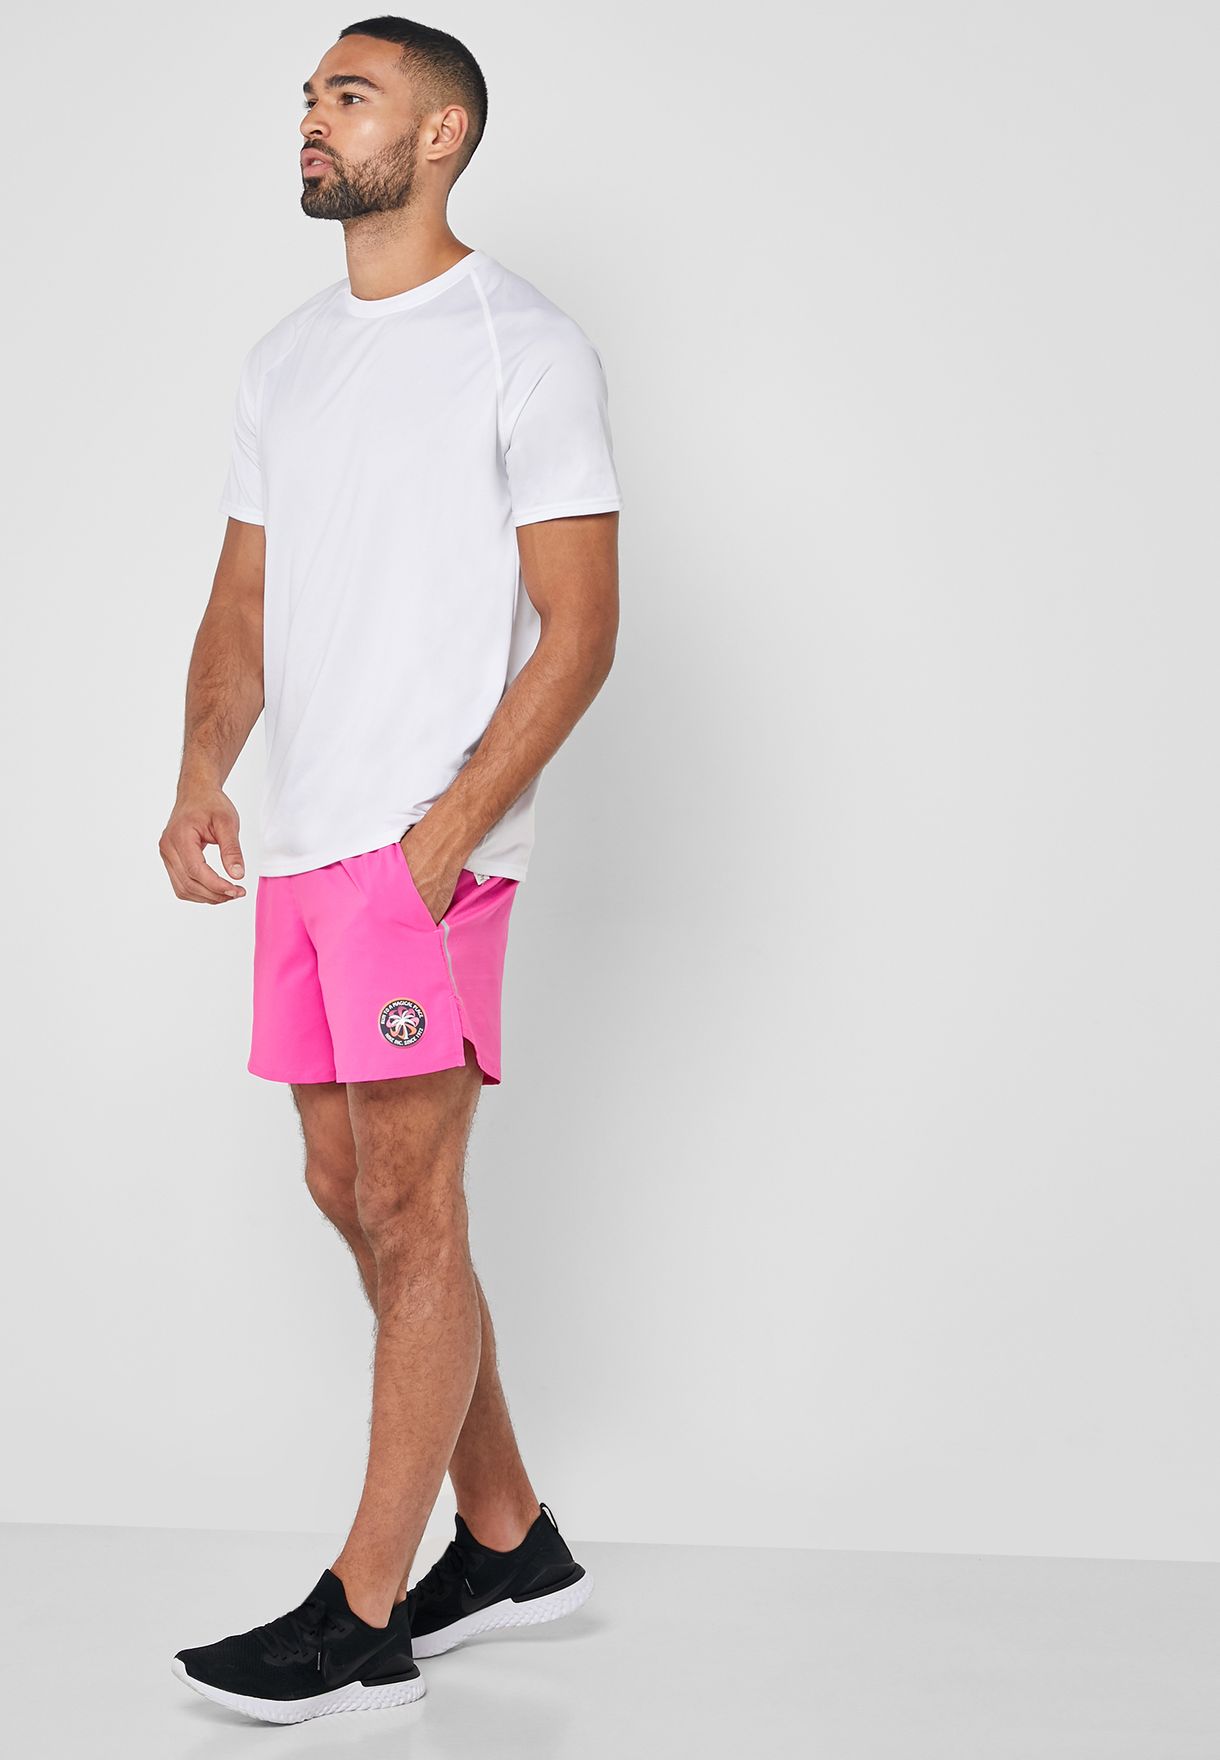 nike shorts pink mens cheap online